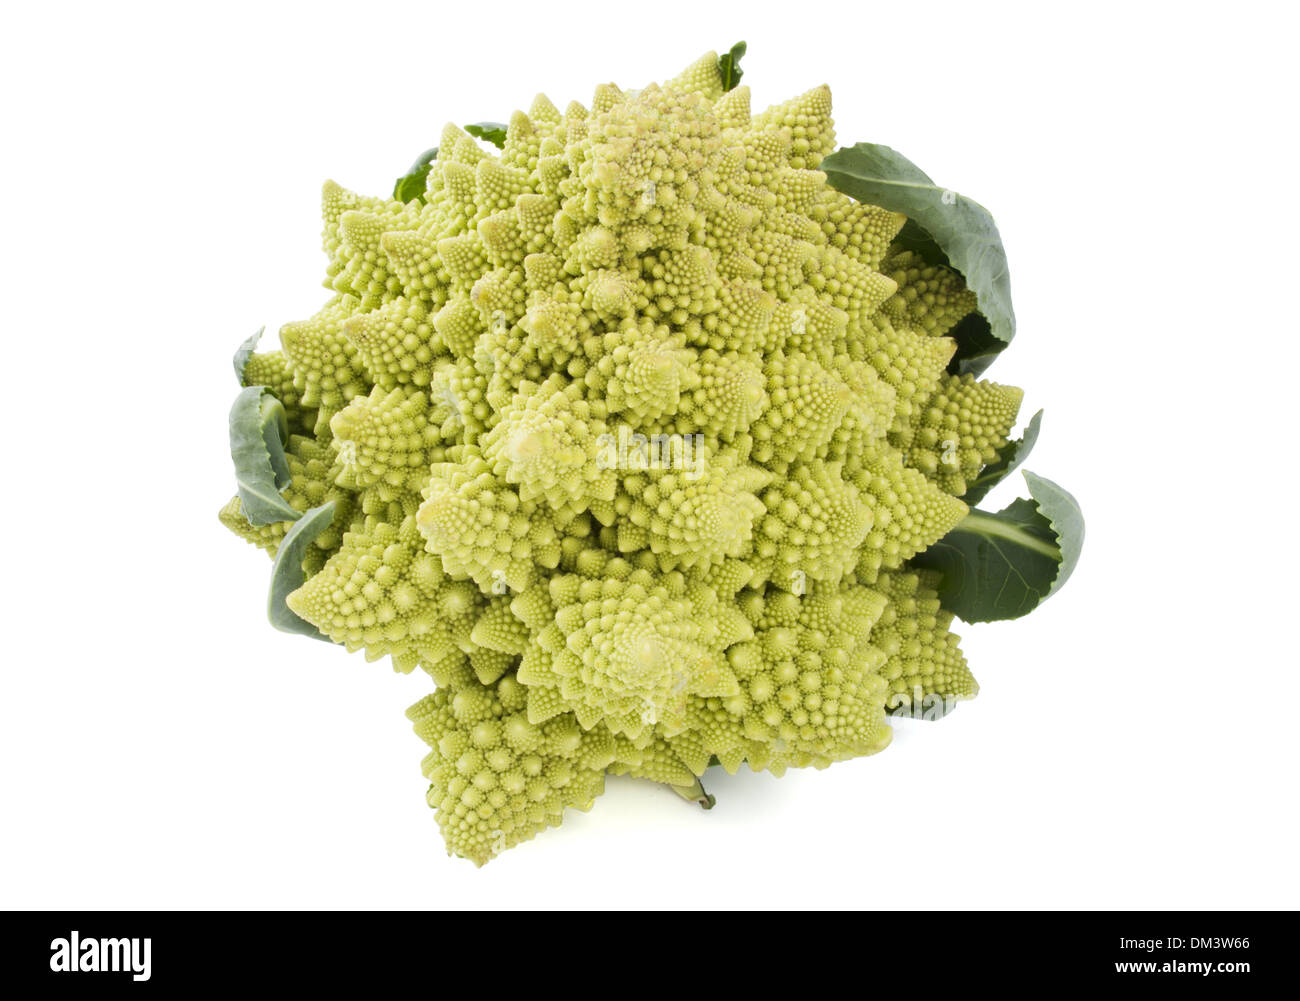 One whole Romanesco broccoli (Brassica oleracea) on a white background Stock Photo